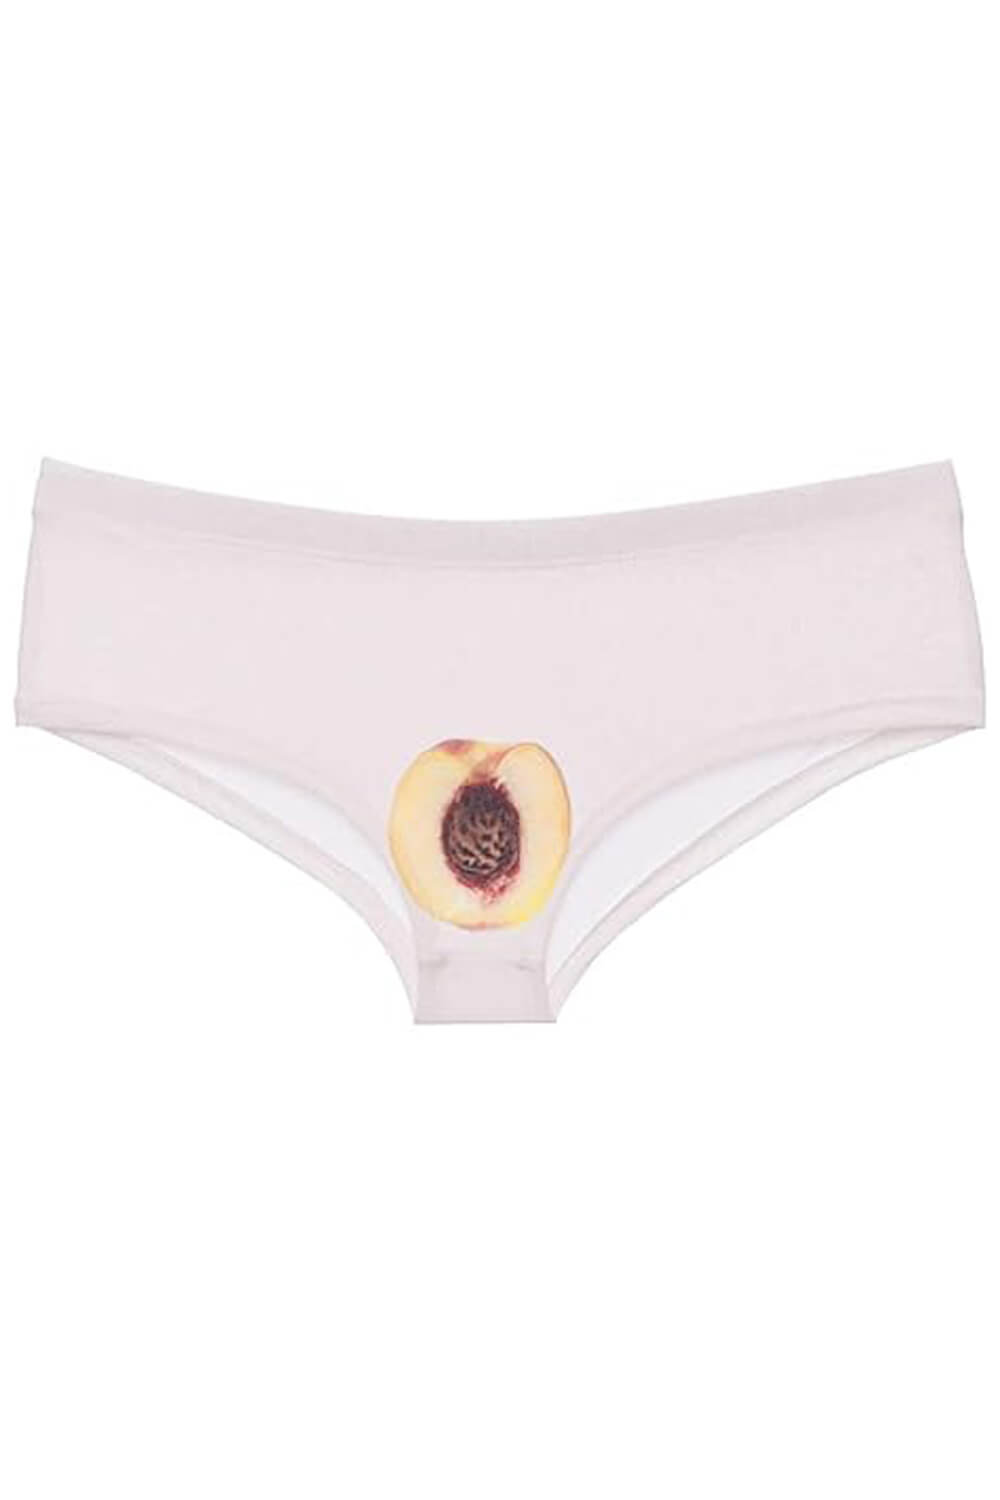 Peach Print Panties for Women Cute Aesthetic